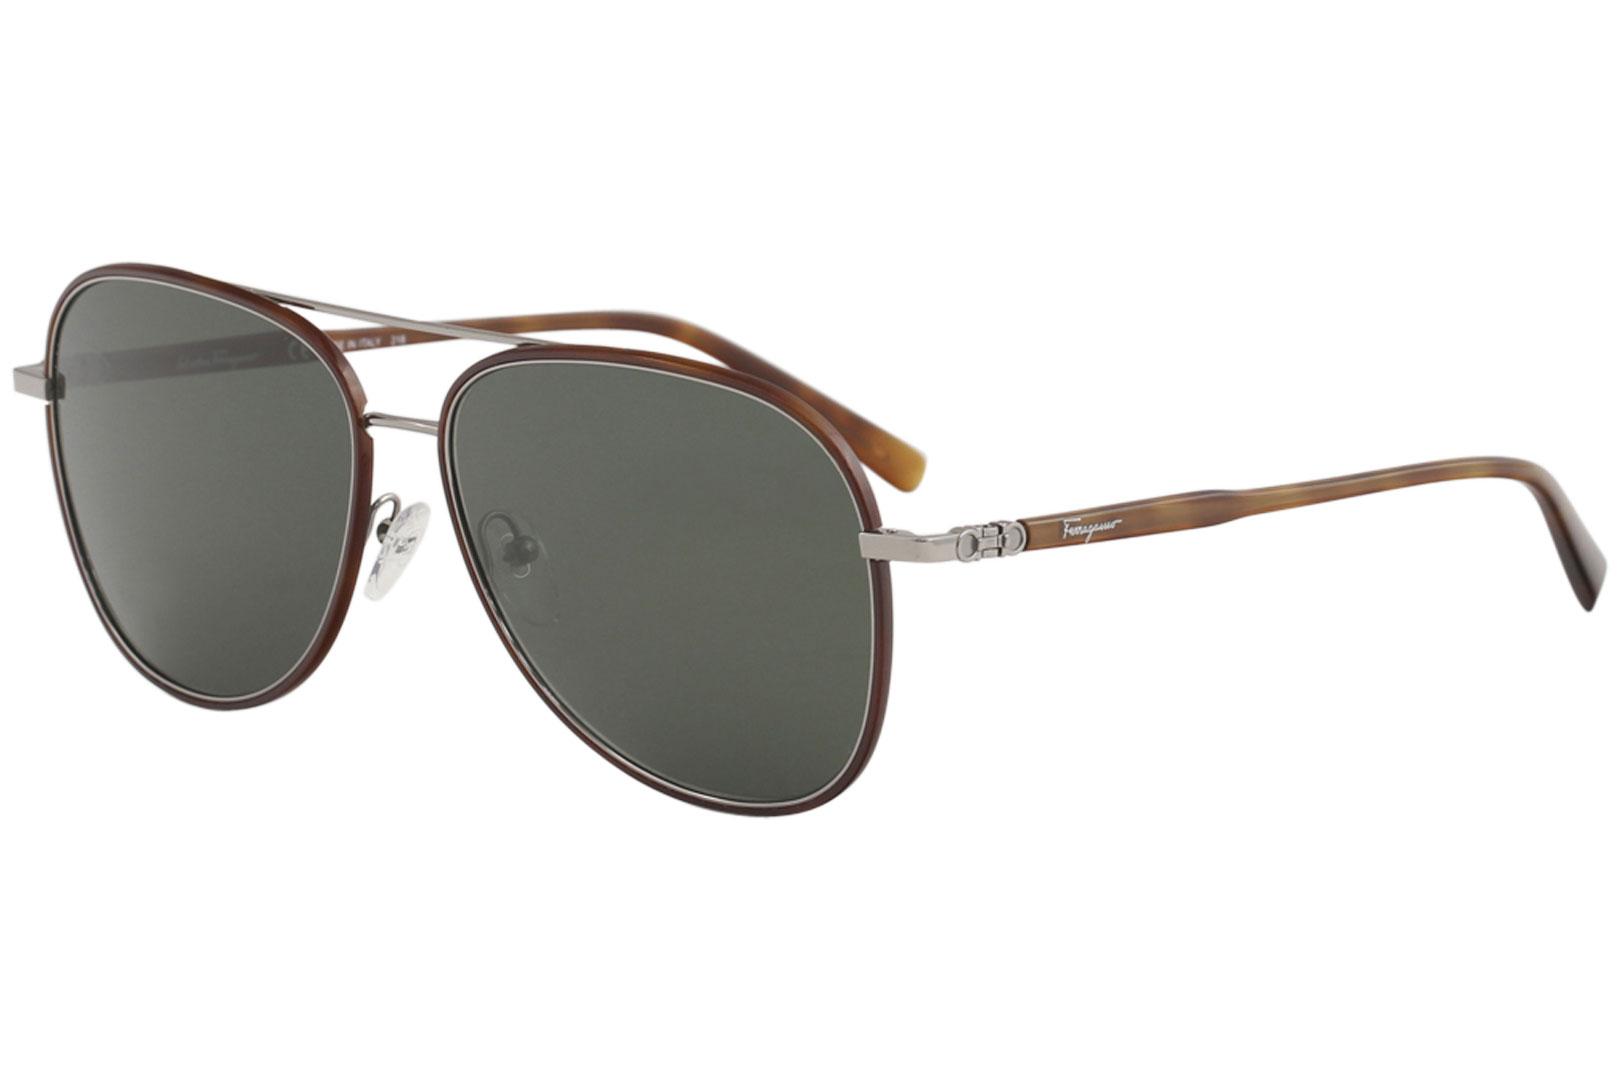 Salvatore Ferragamo Men's SF181S SF/181/S Fashion Pilot Sunglasses - Tortoise/Green   214 - Lens 60 Bridge 15 Temple 145mm